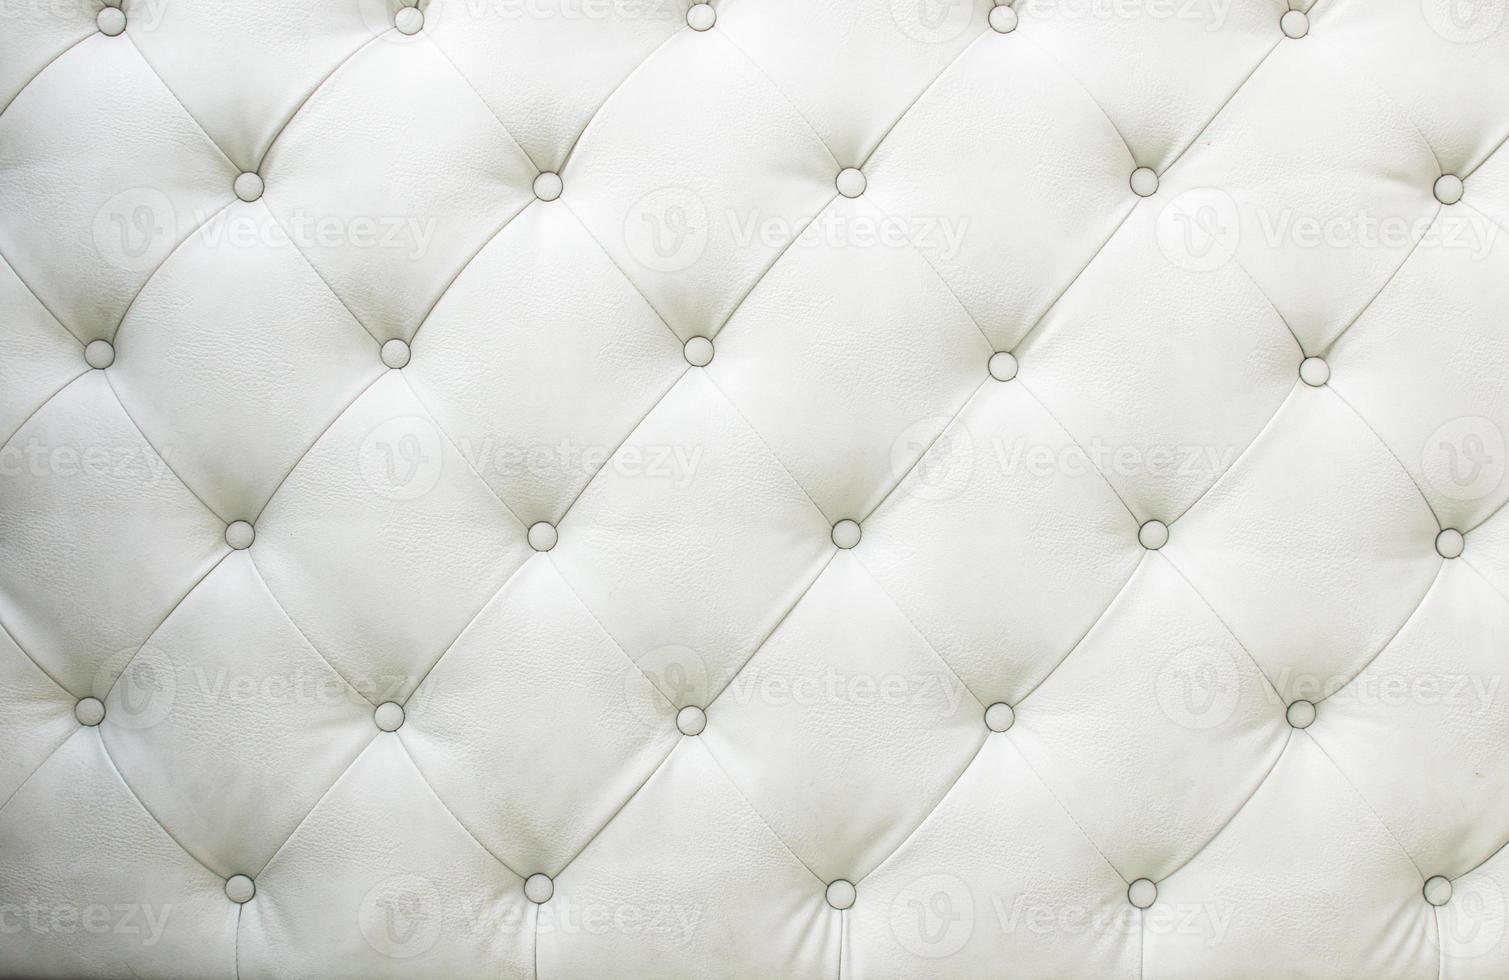 fundo abstrato do sofá da superfície foto